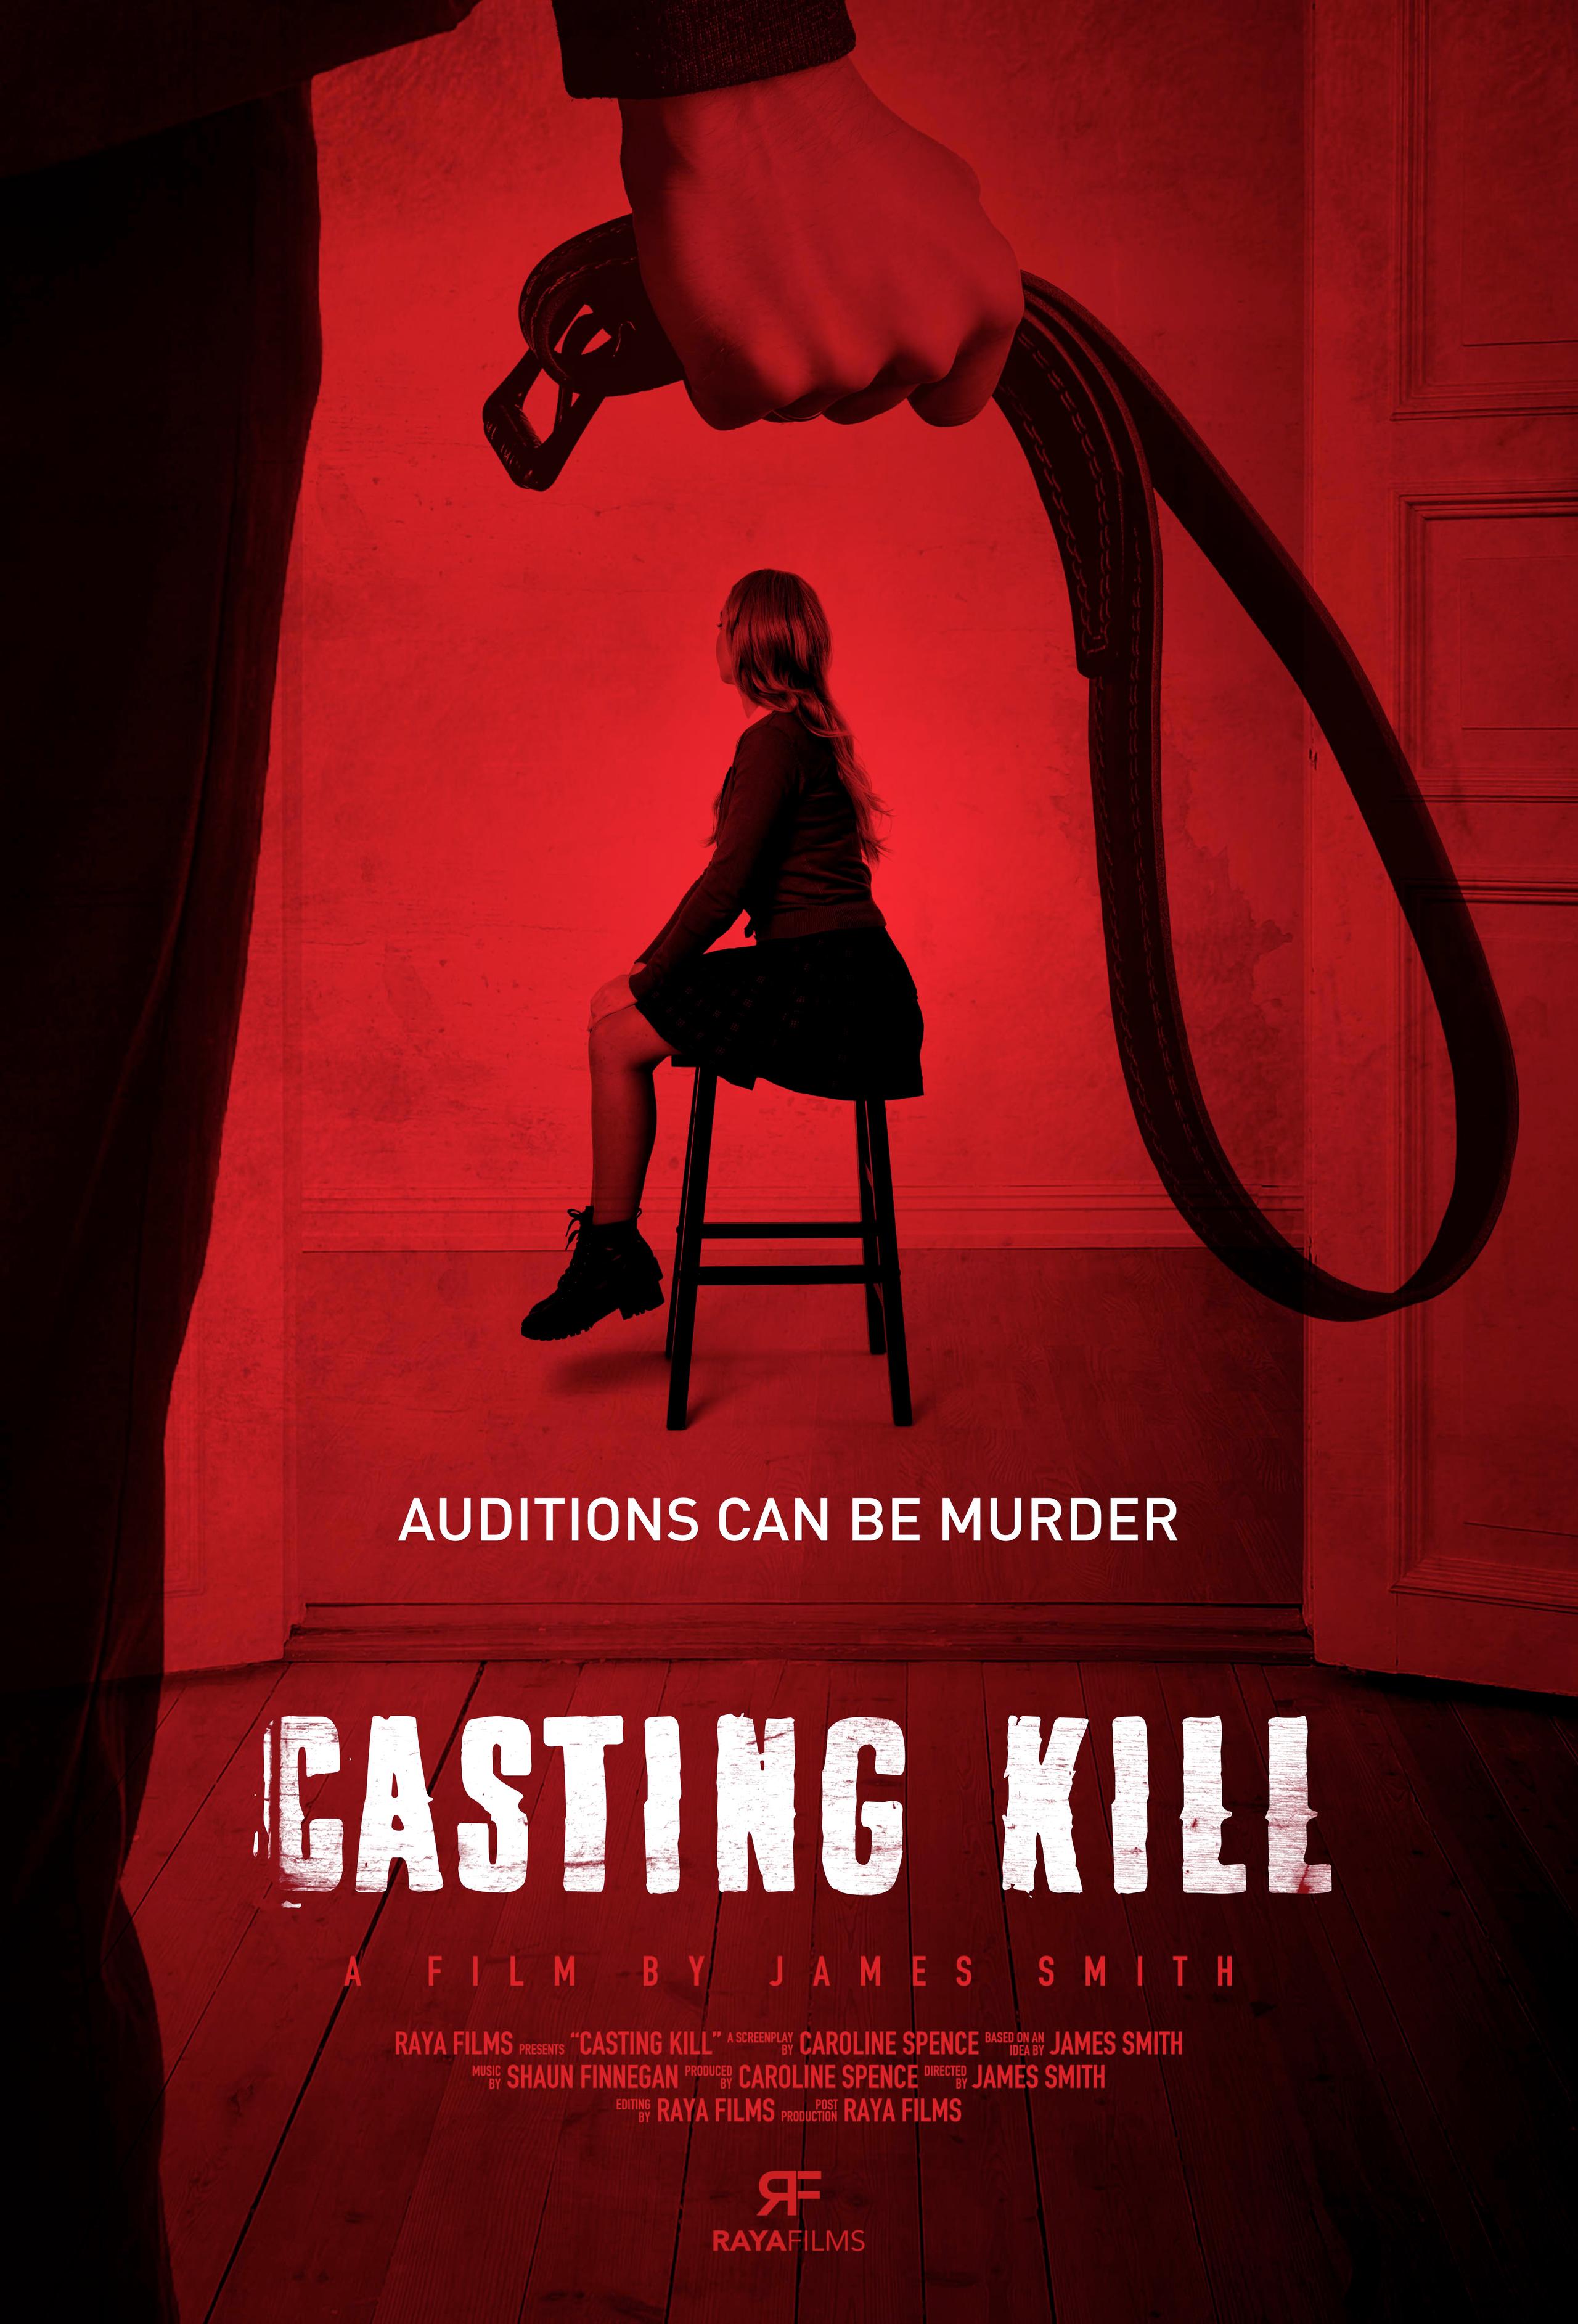 Award nominations for Casting Kill